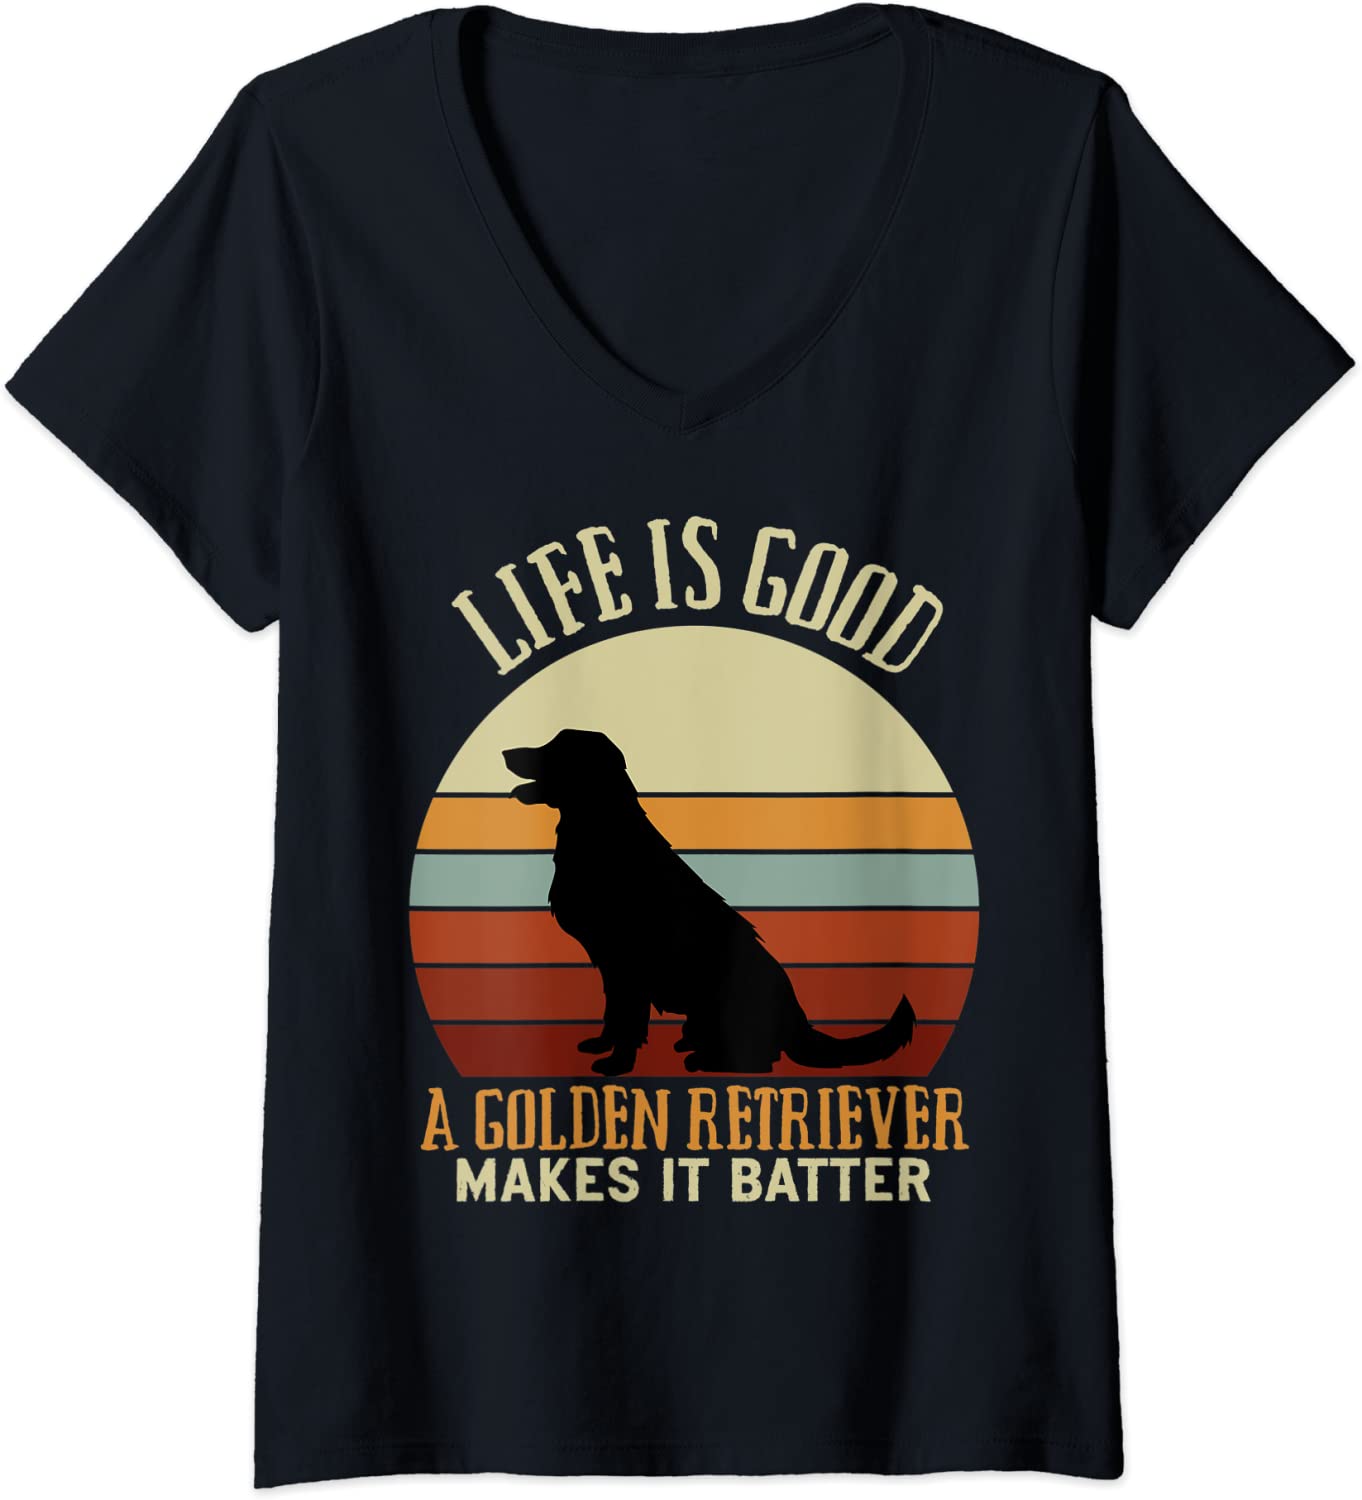 Amazon.com: Womens Golden Retriever Life is Good Tshirt V ...